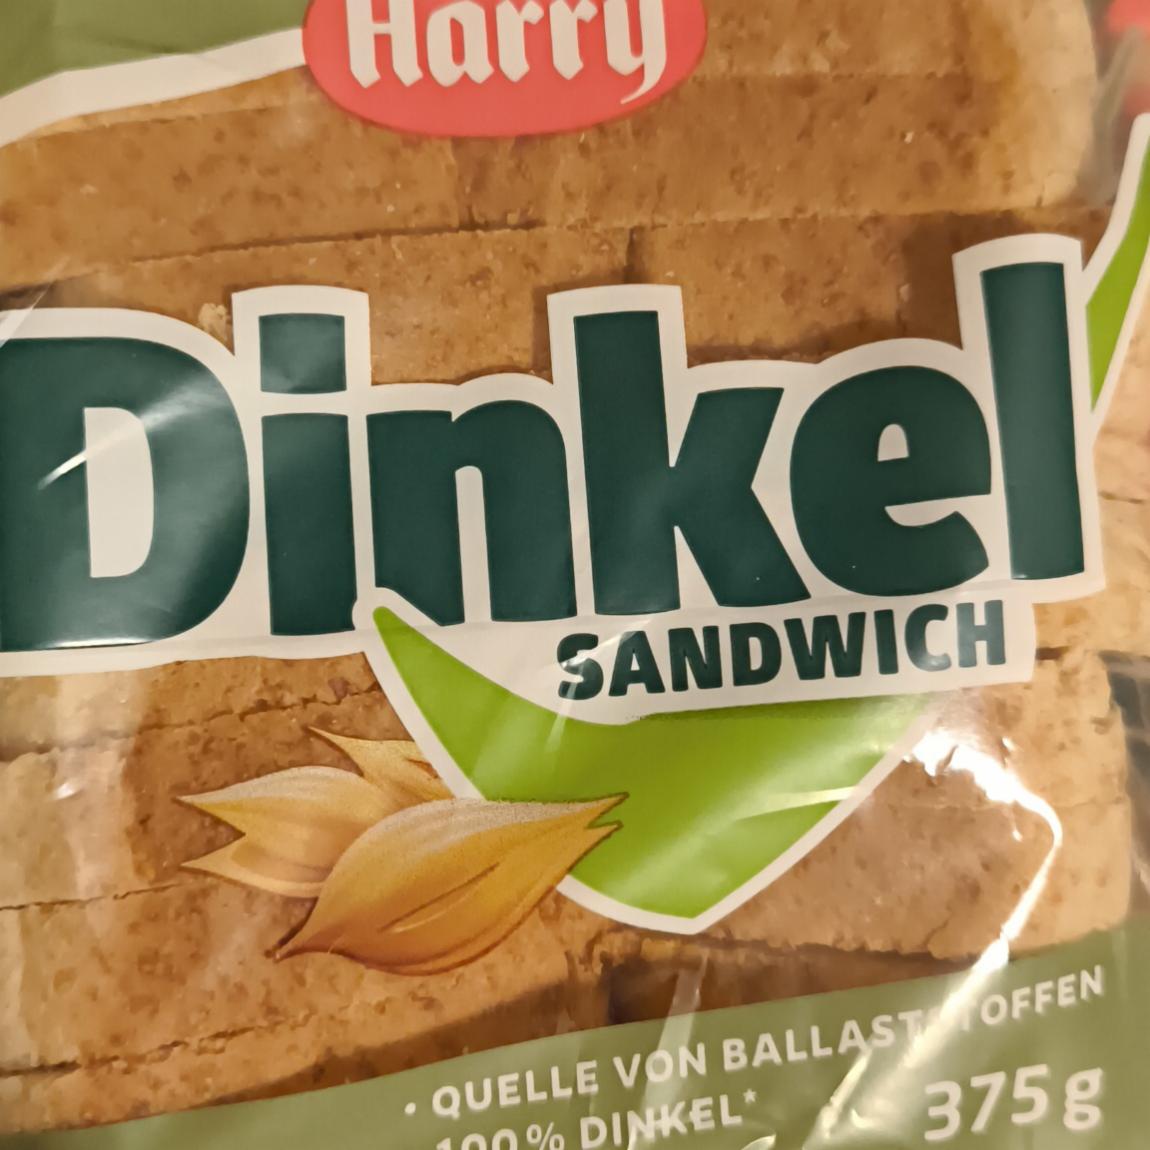 Zdjęcia - Dinkel Sandwich Harry